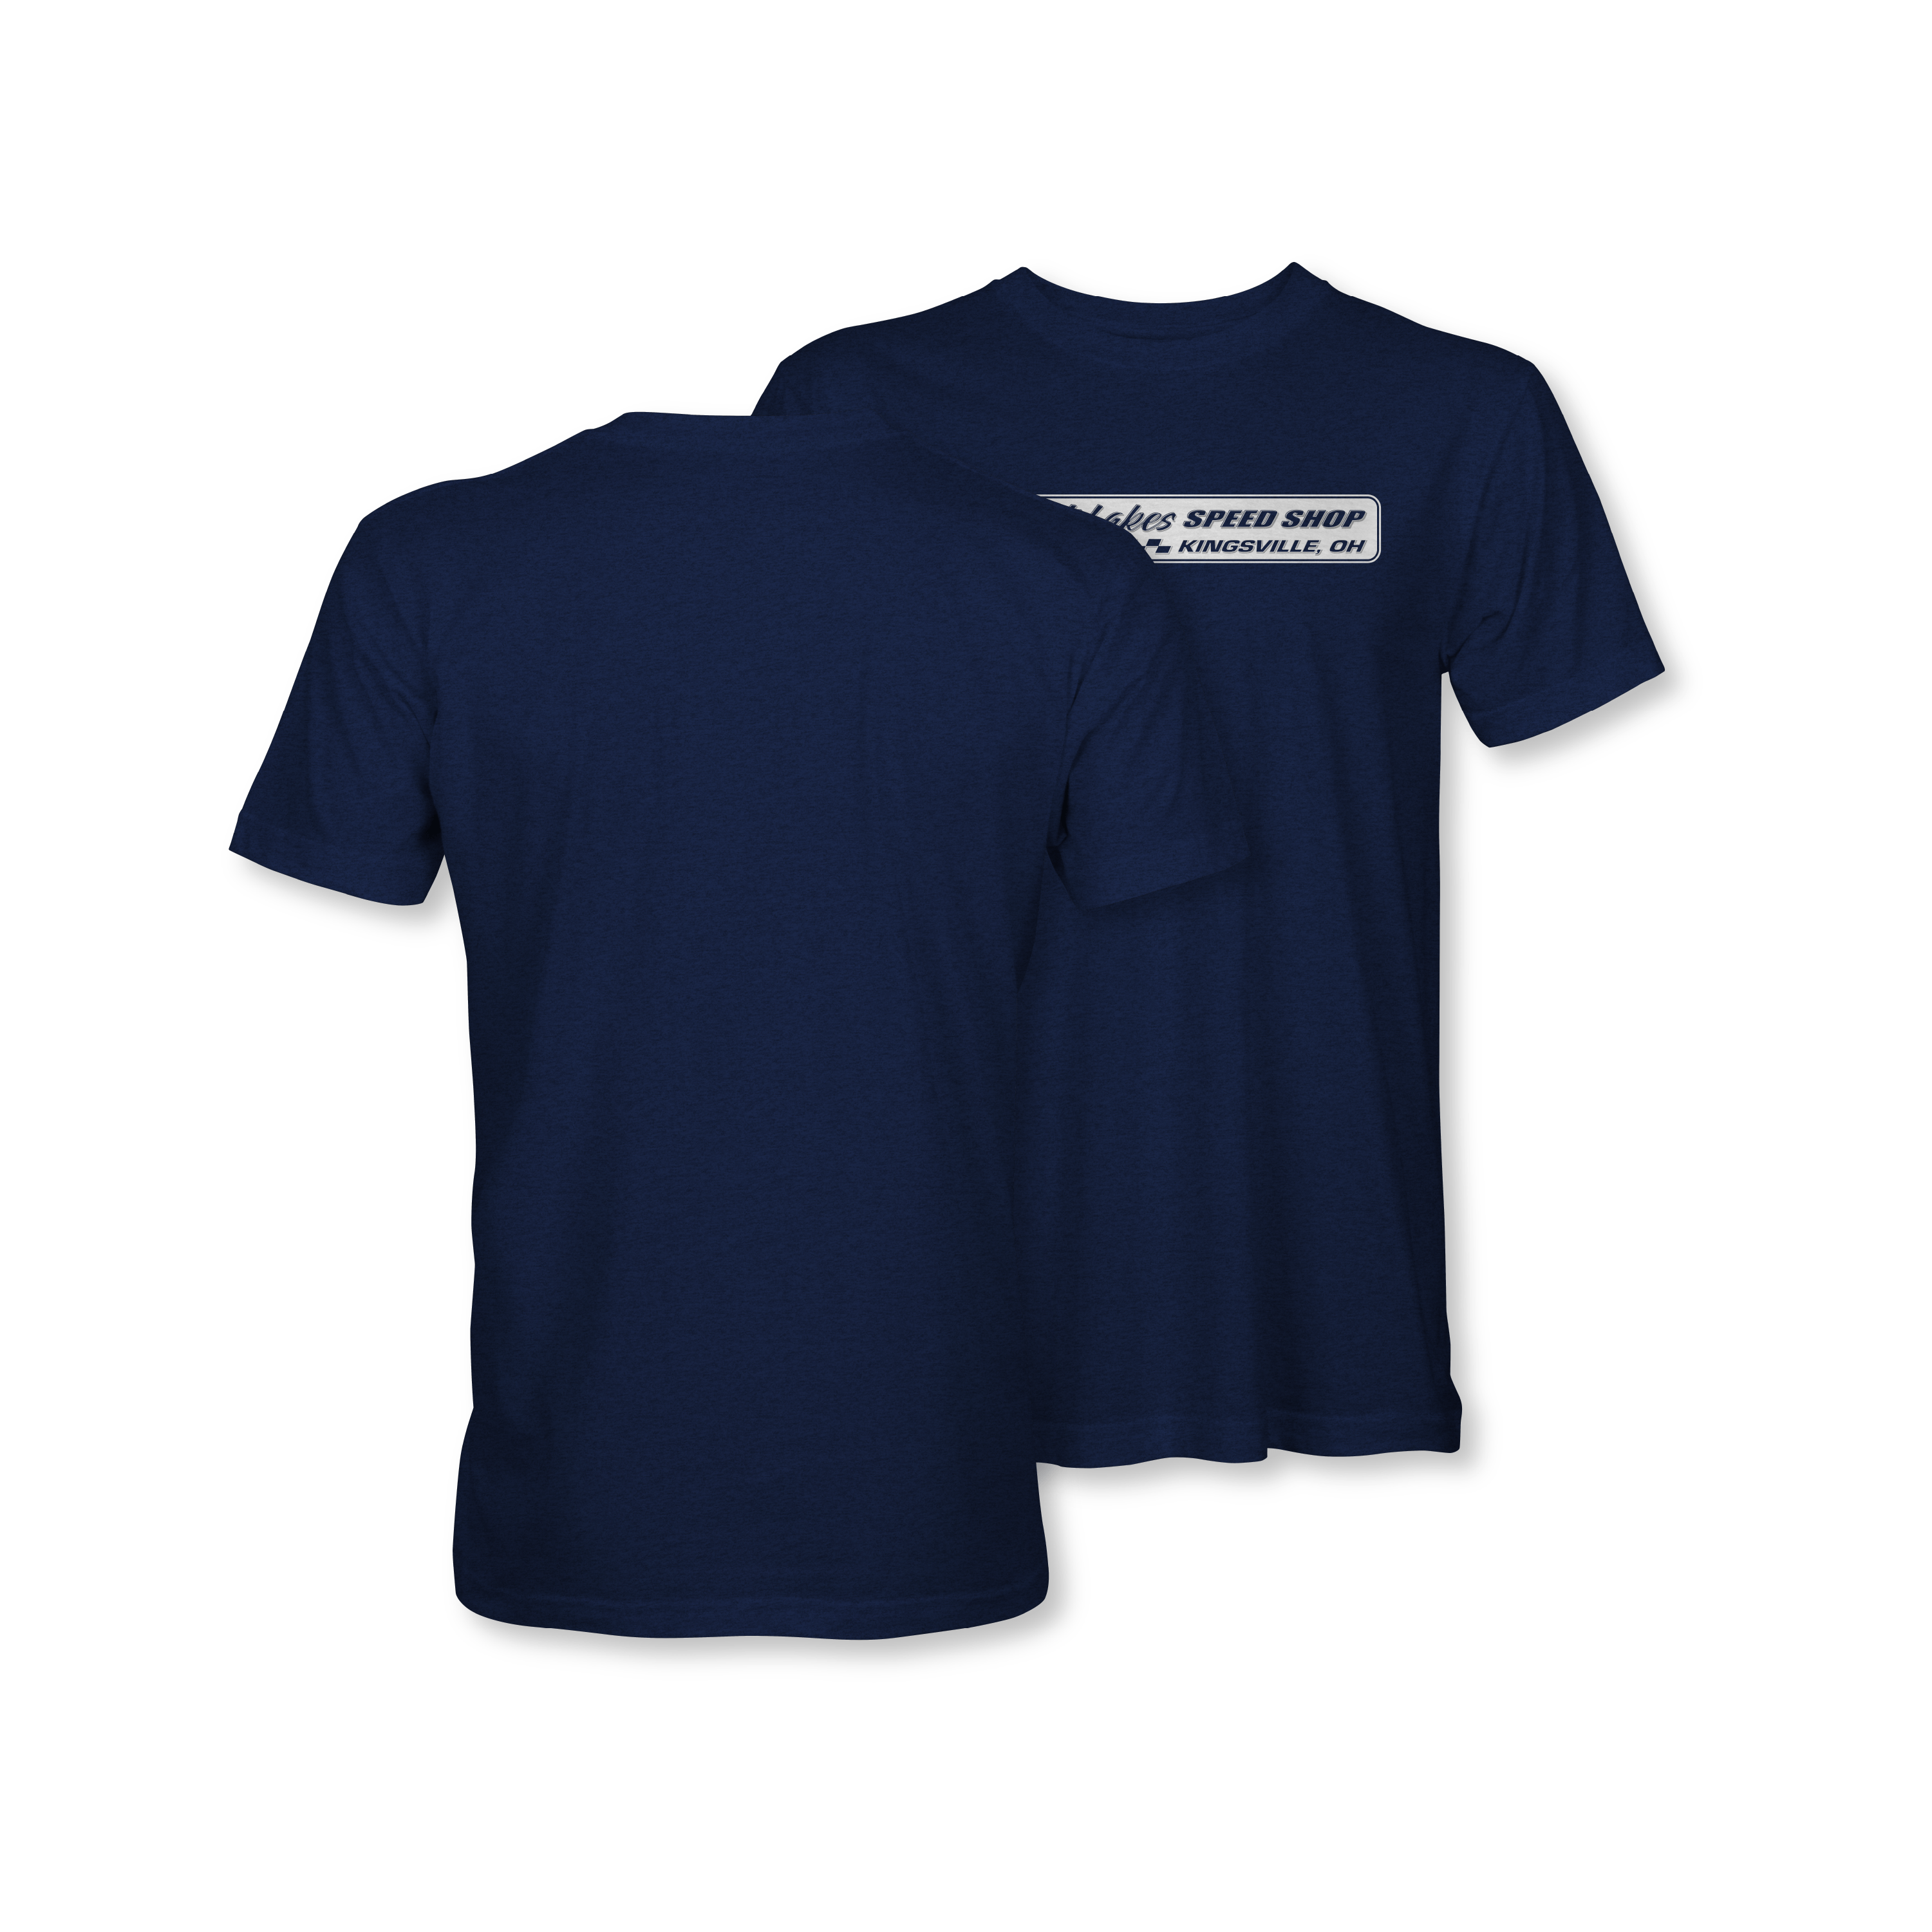 Great Lakes Speed Shop Logo Shirts - Navy